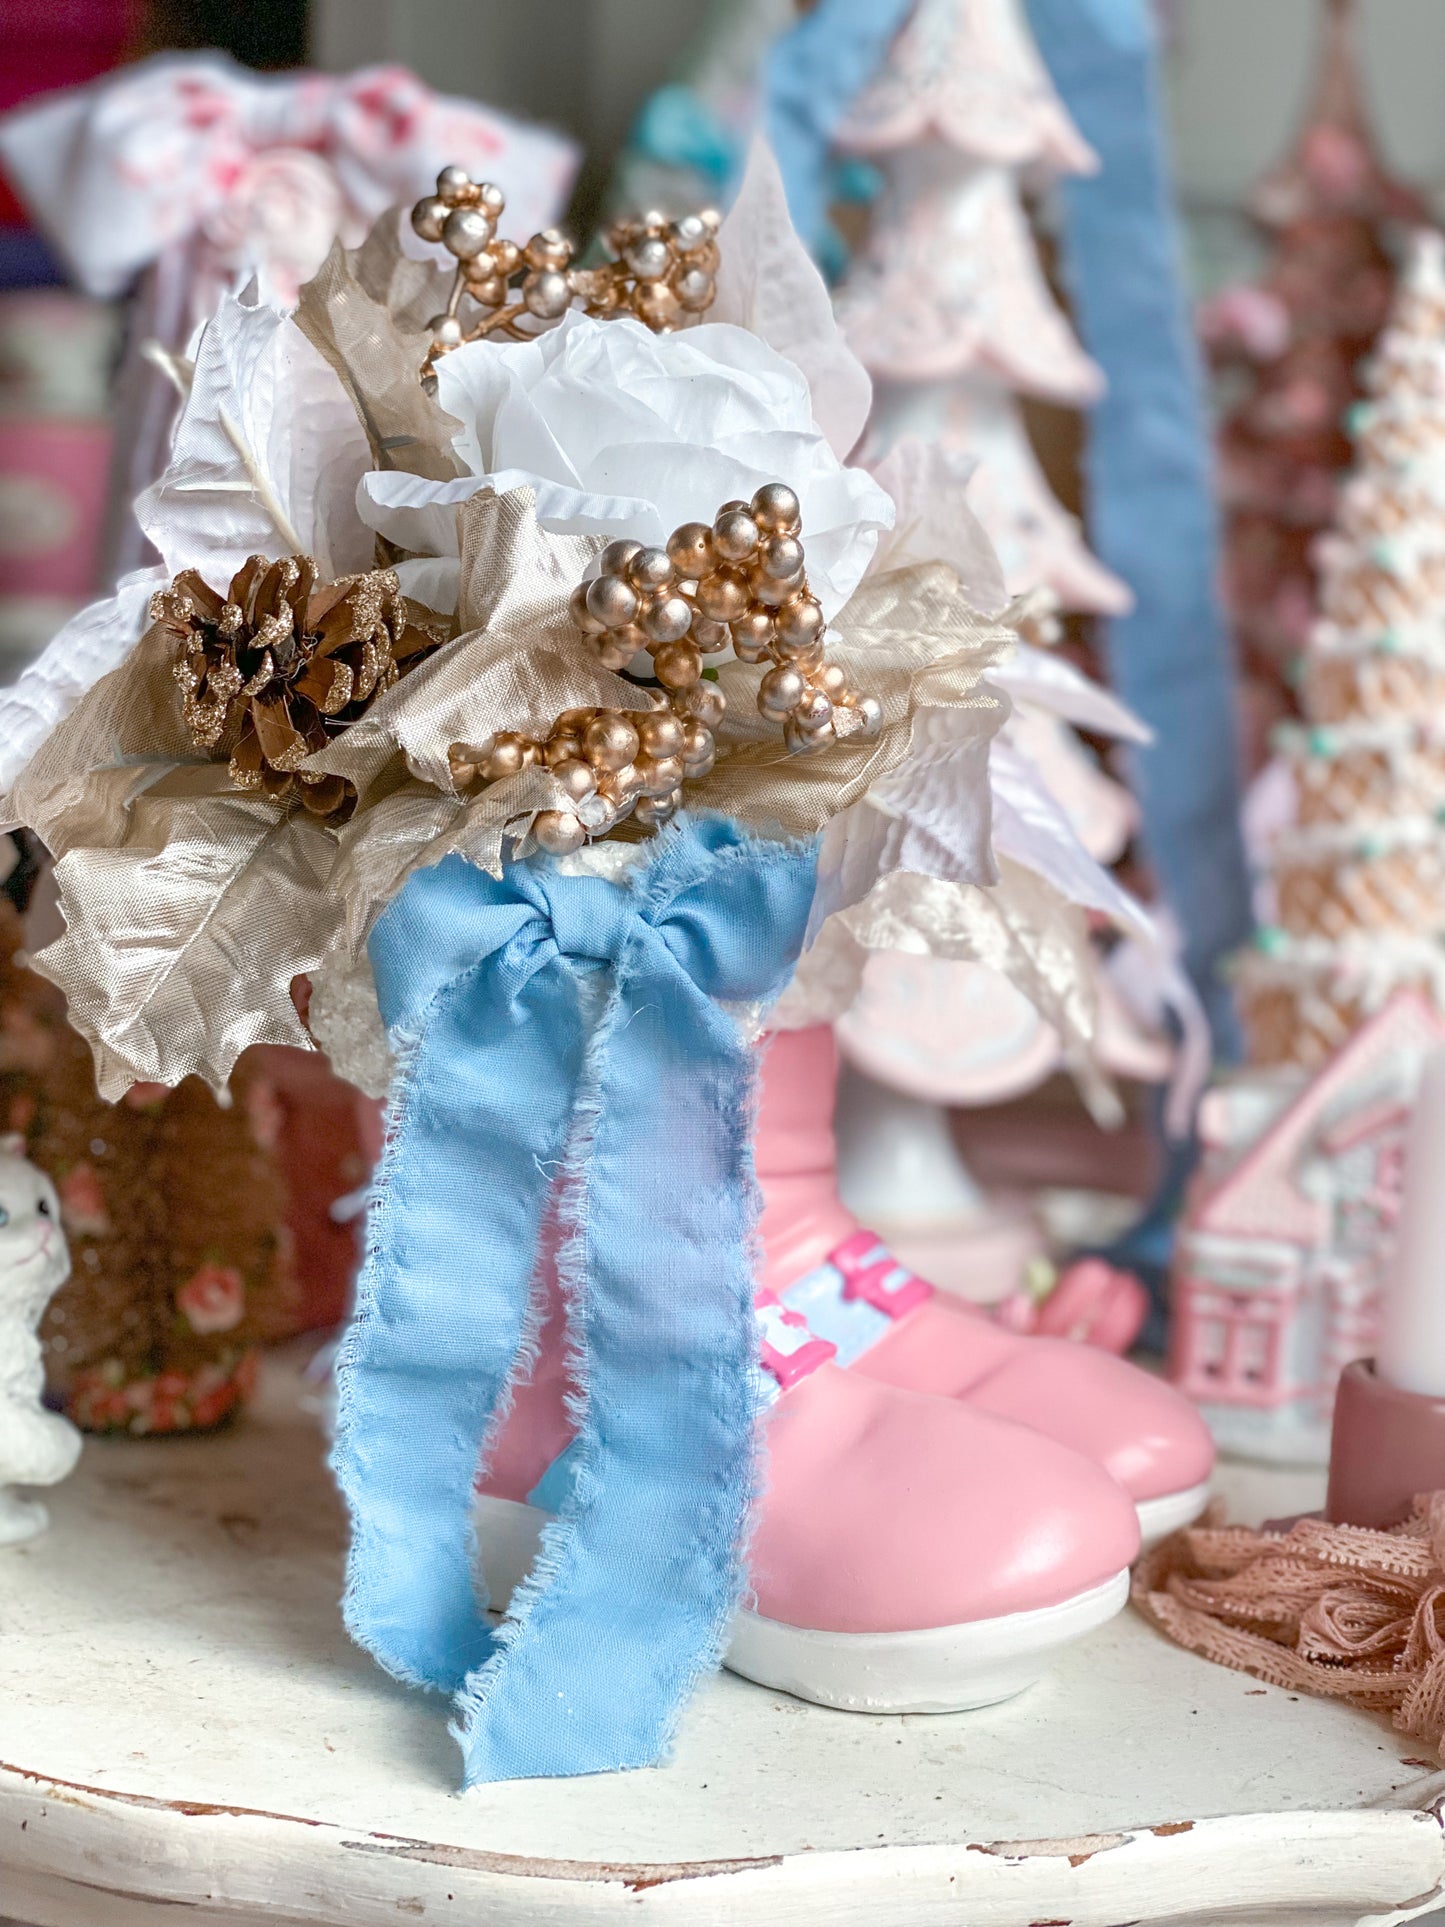 Bespoke Pastel Pink & Blue Santa Boots with Pink Poinsettia Arrangement